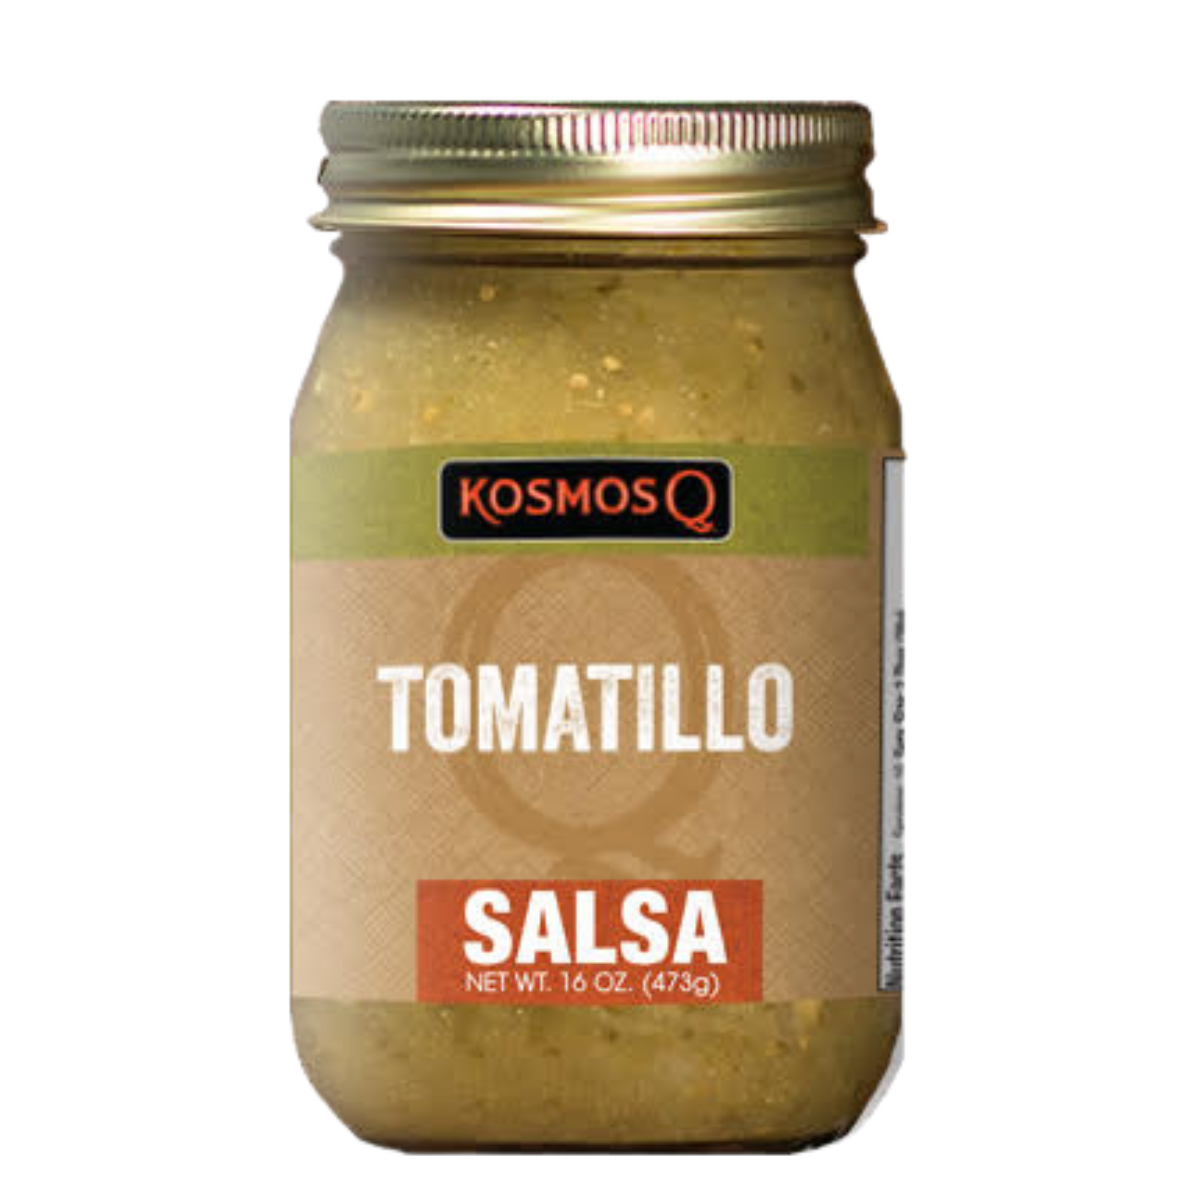 Kosmos Q BBQ Products & Supplies Tomatillo Salsa